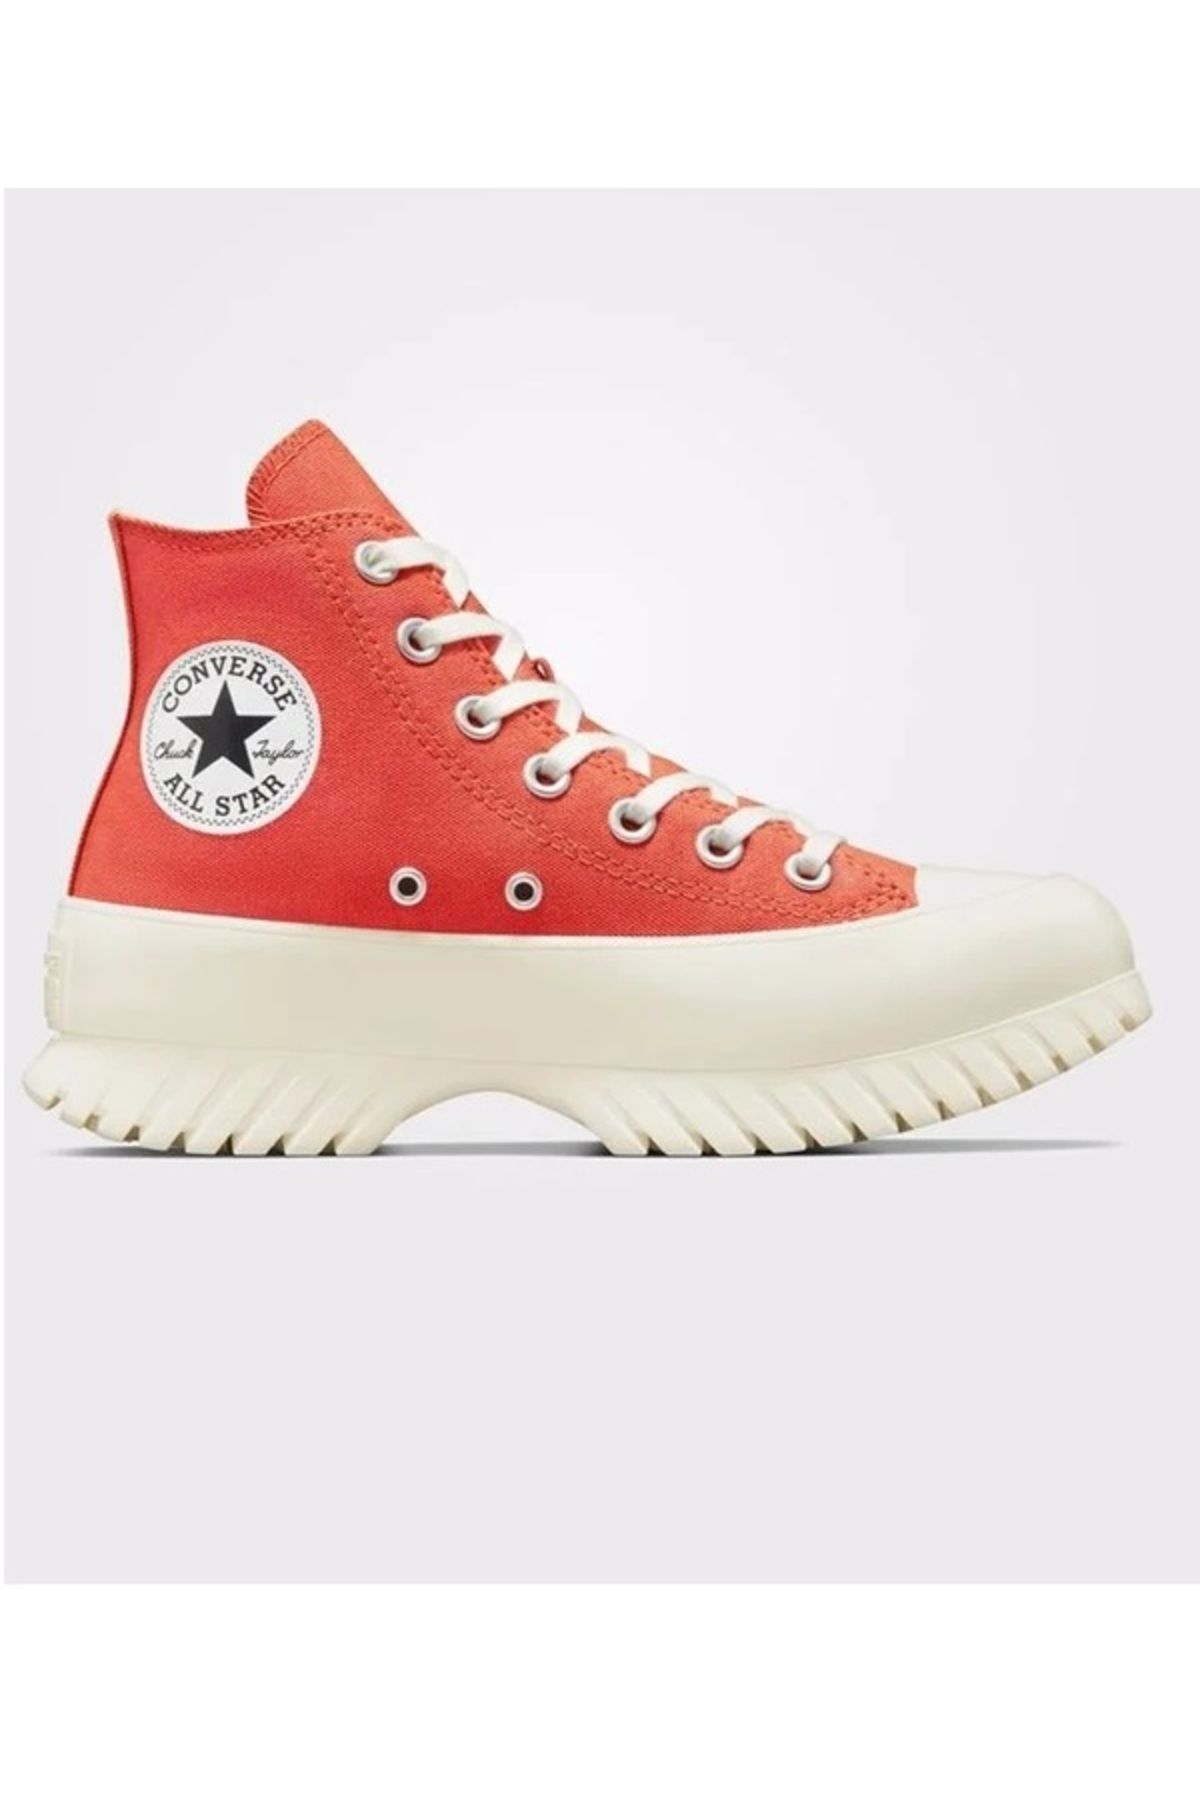 Converse Chuck Taylor All Star Lugged 2.0 Platform Kadın Sneaker Ayakkabı